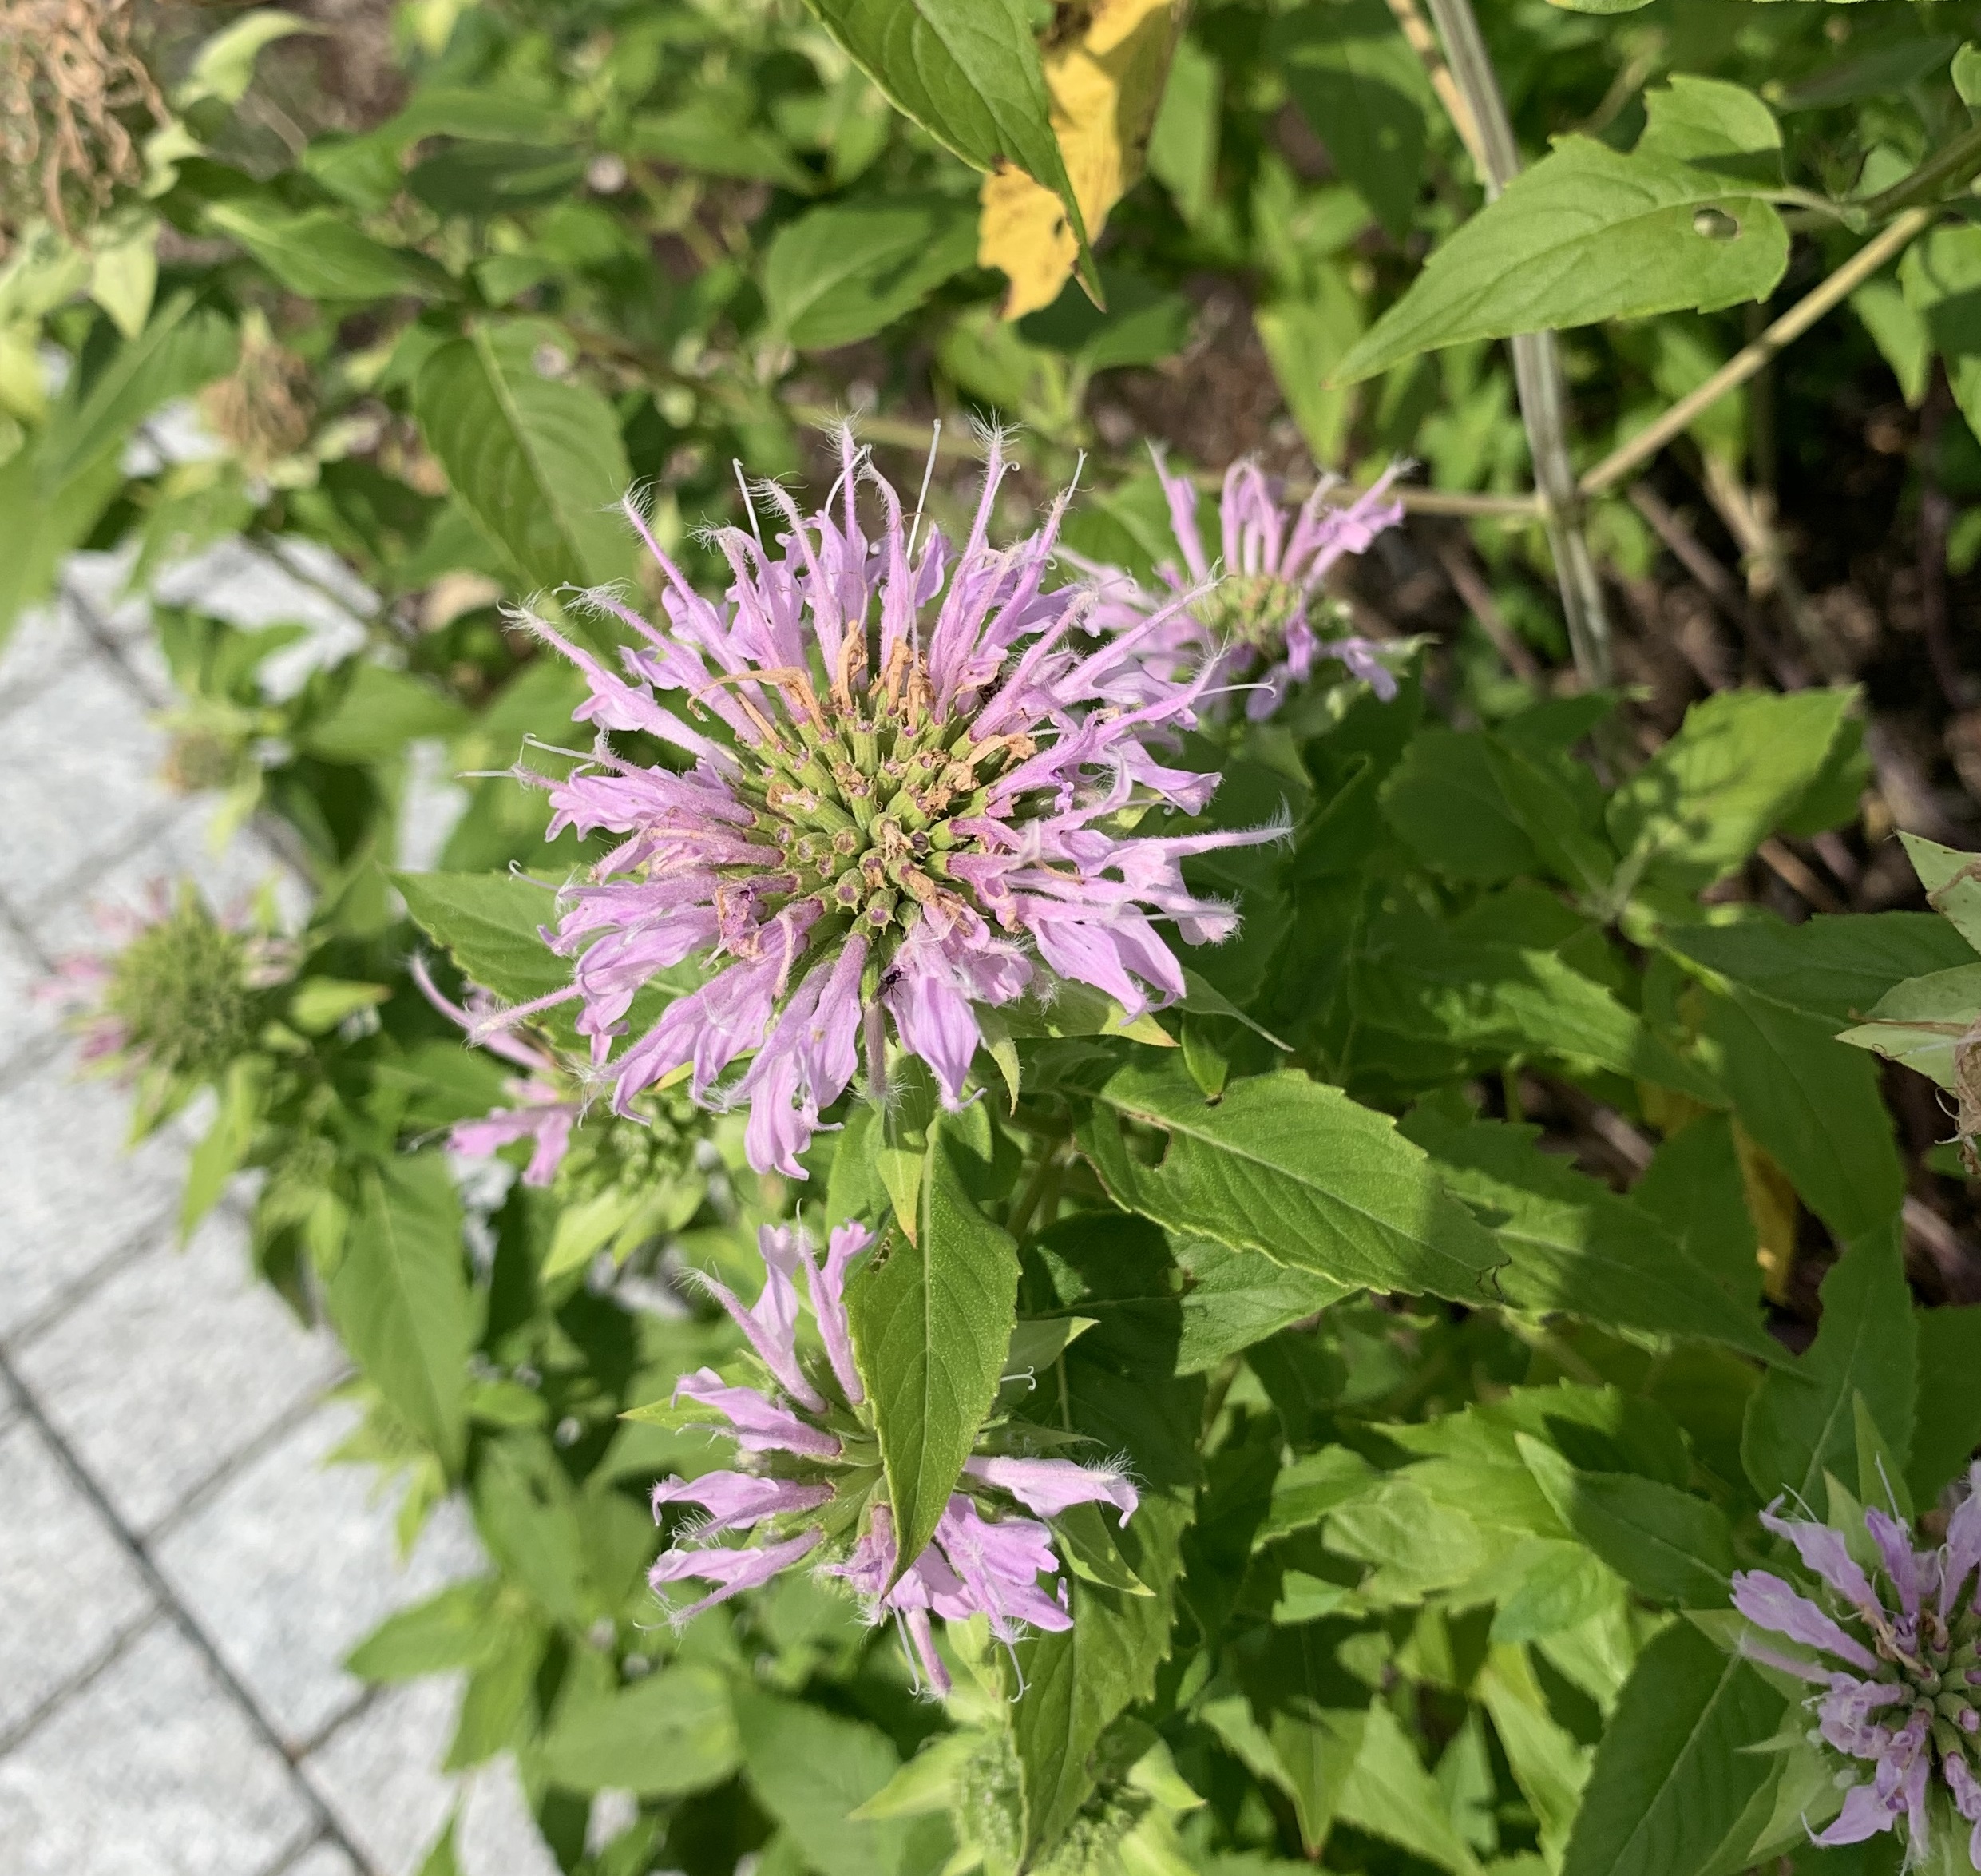 A closeup of a pale purple flower